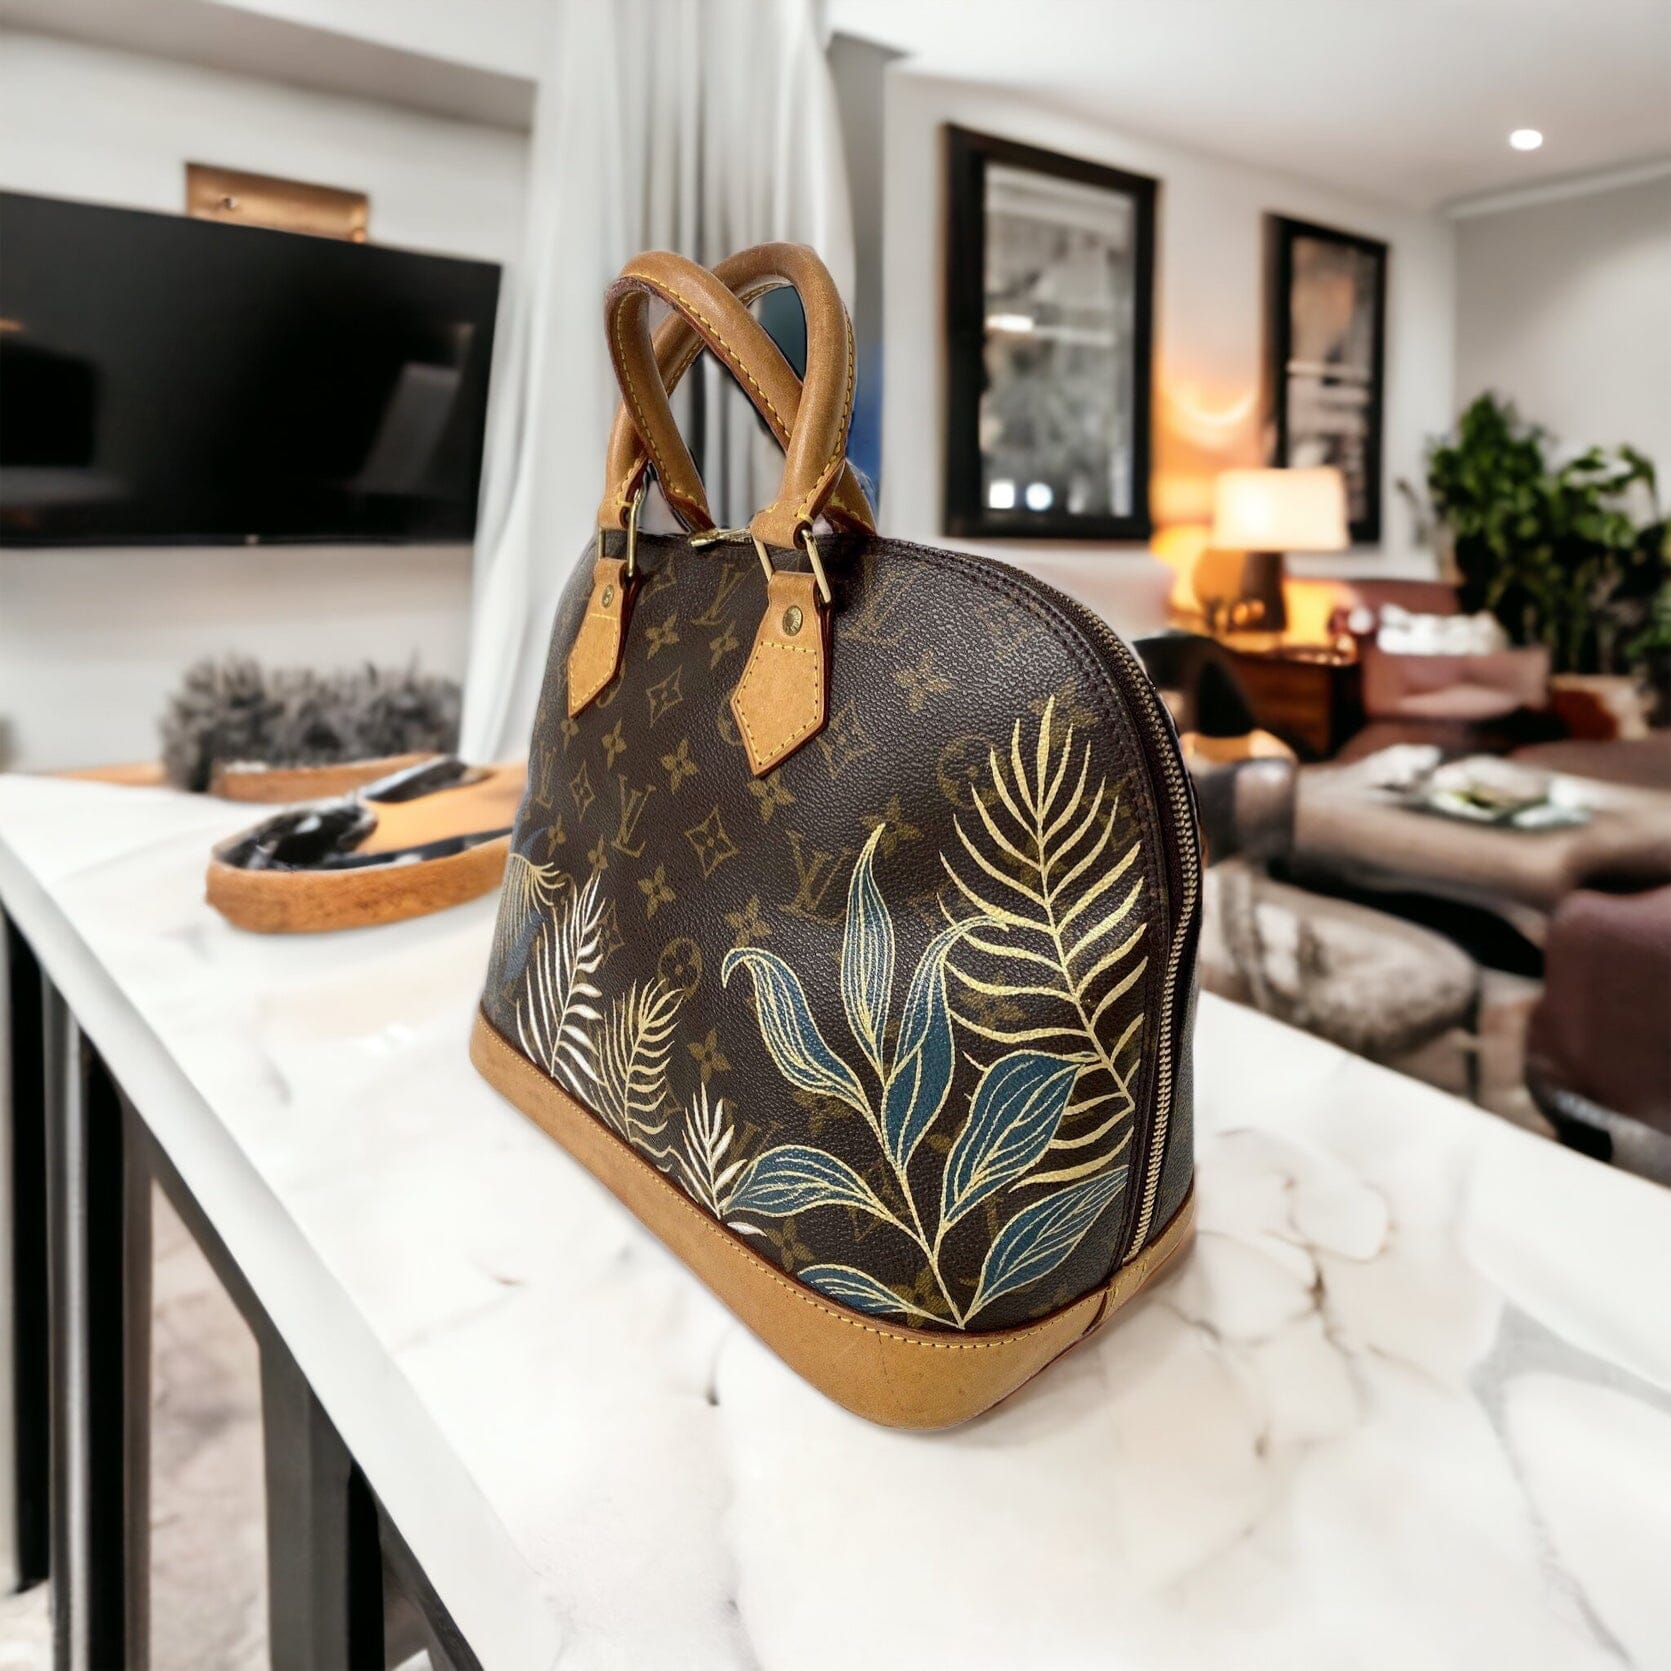 Louis Vuitton - Authenticated Alma Bb Handbag - Cloth Brown Plain for Women, Good Condition